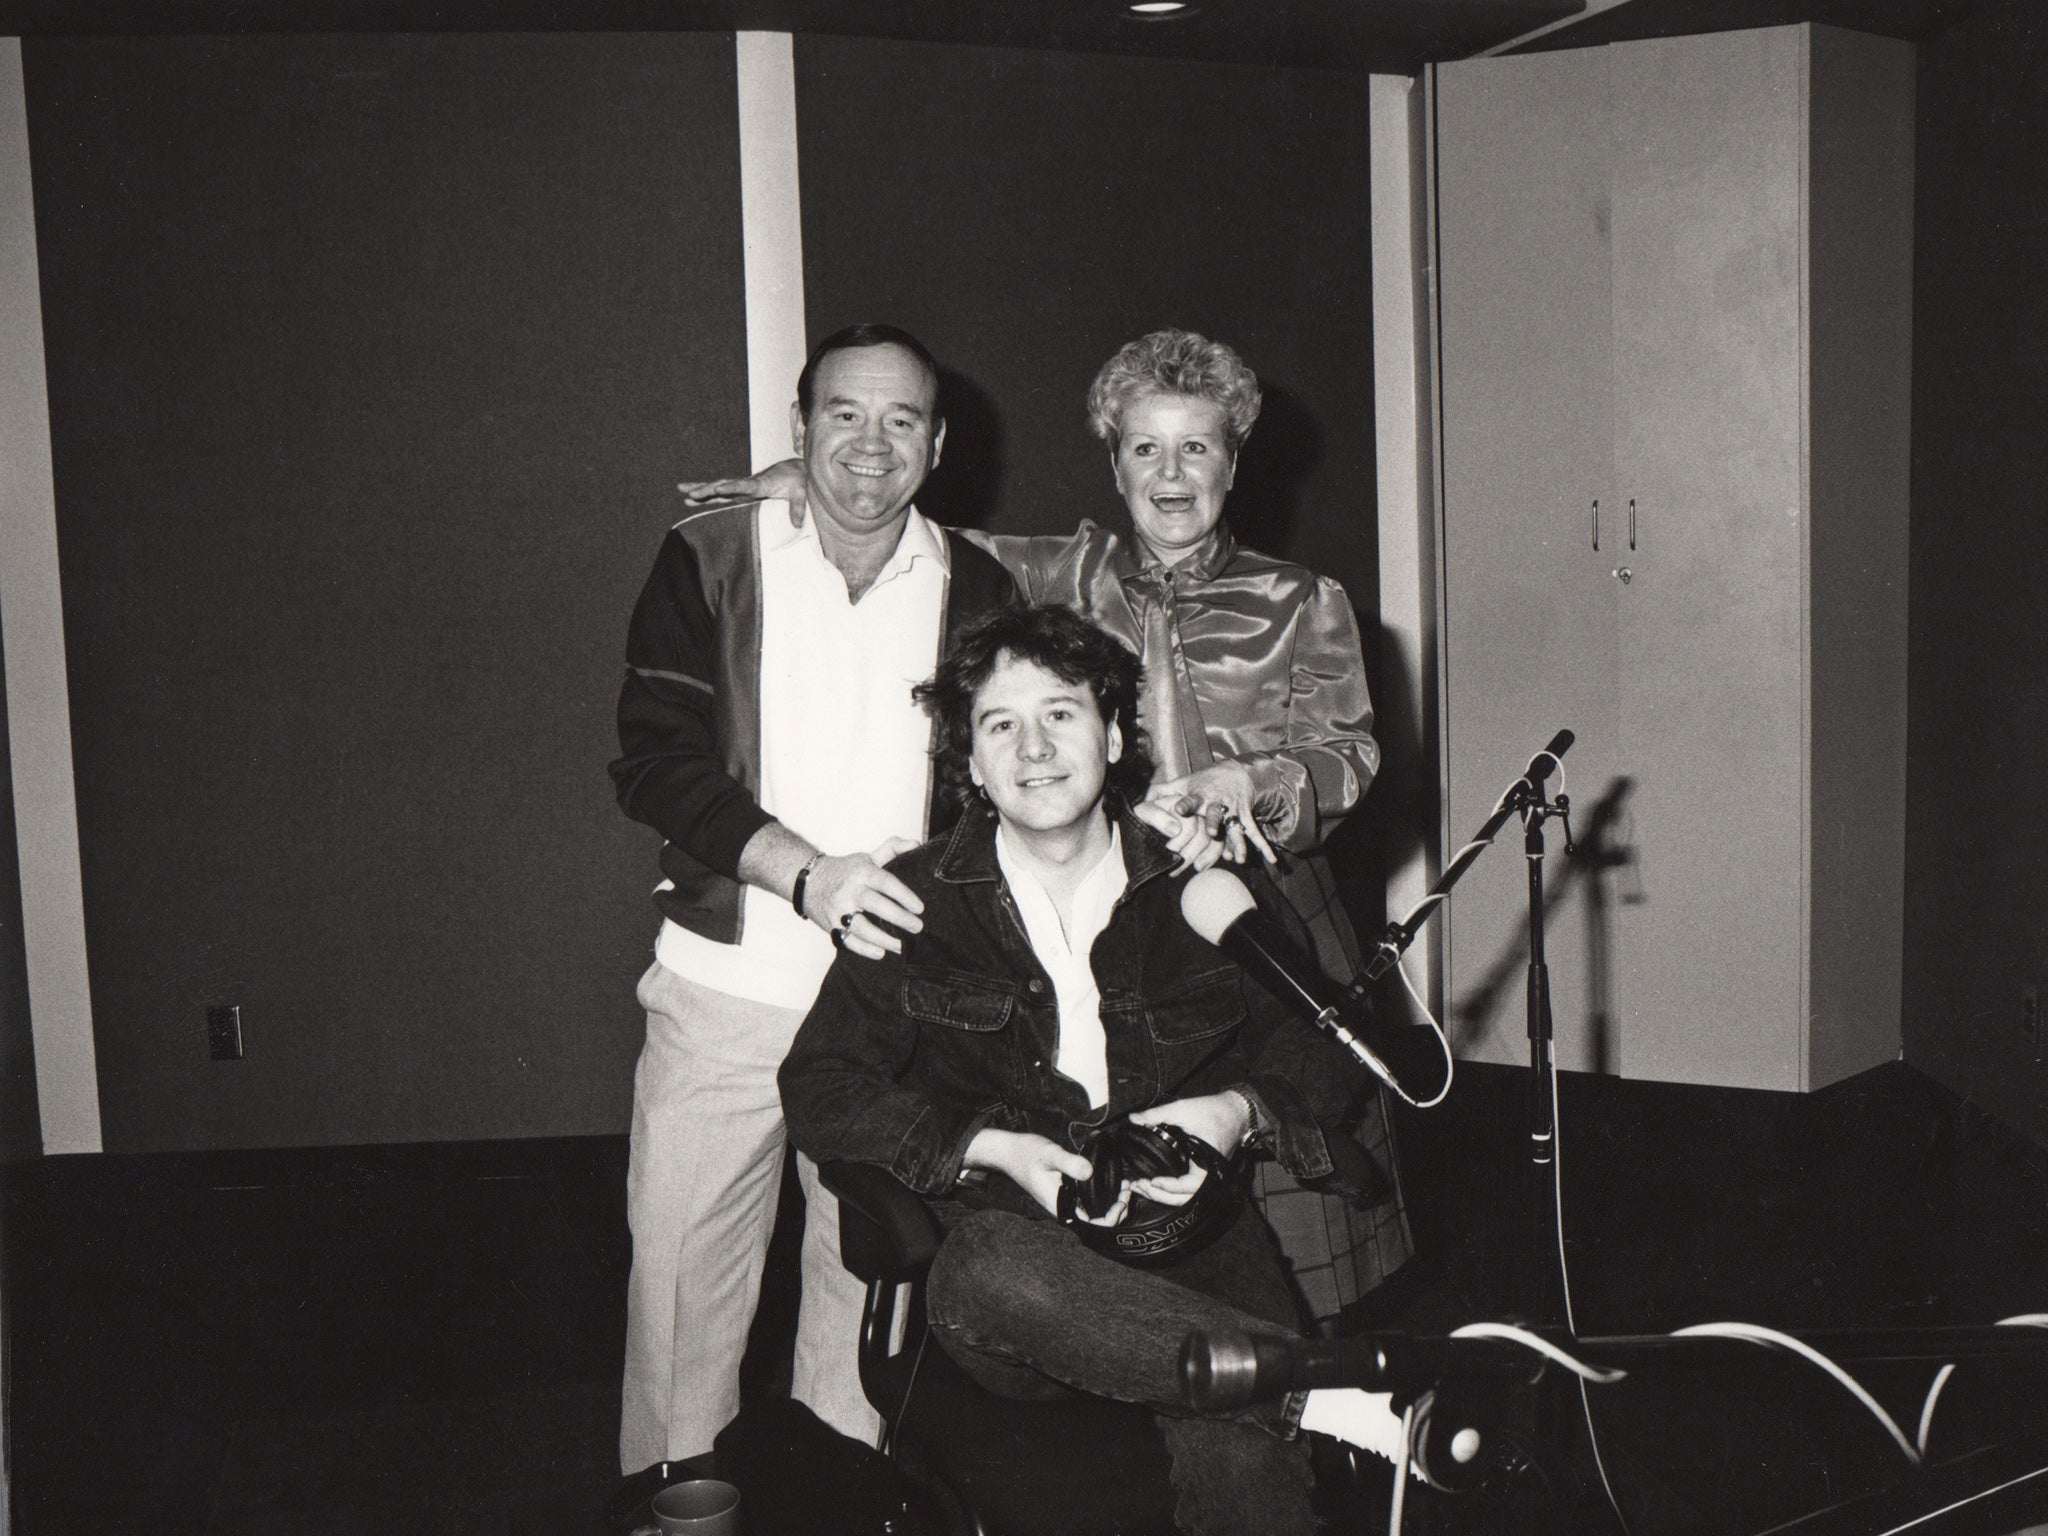 Simple Minds frontman Jim Kerr with his parents